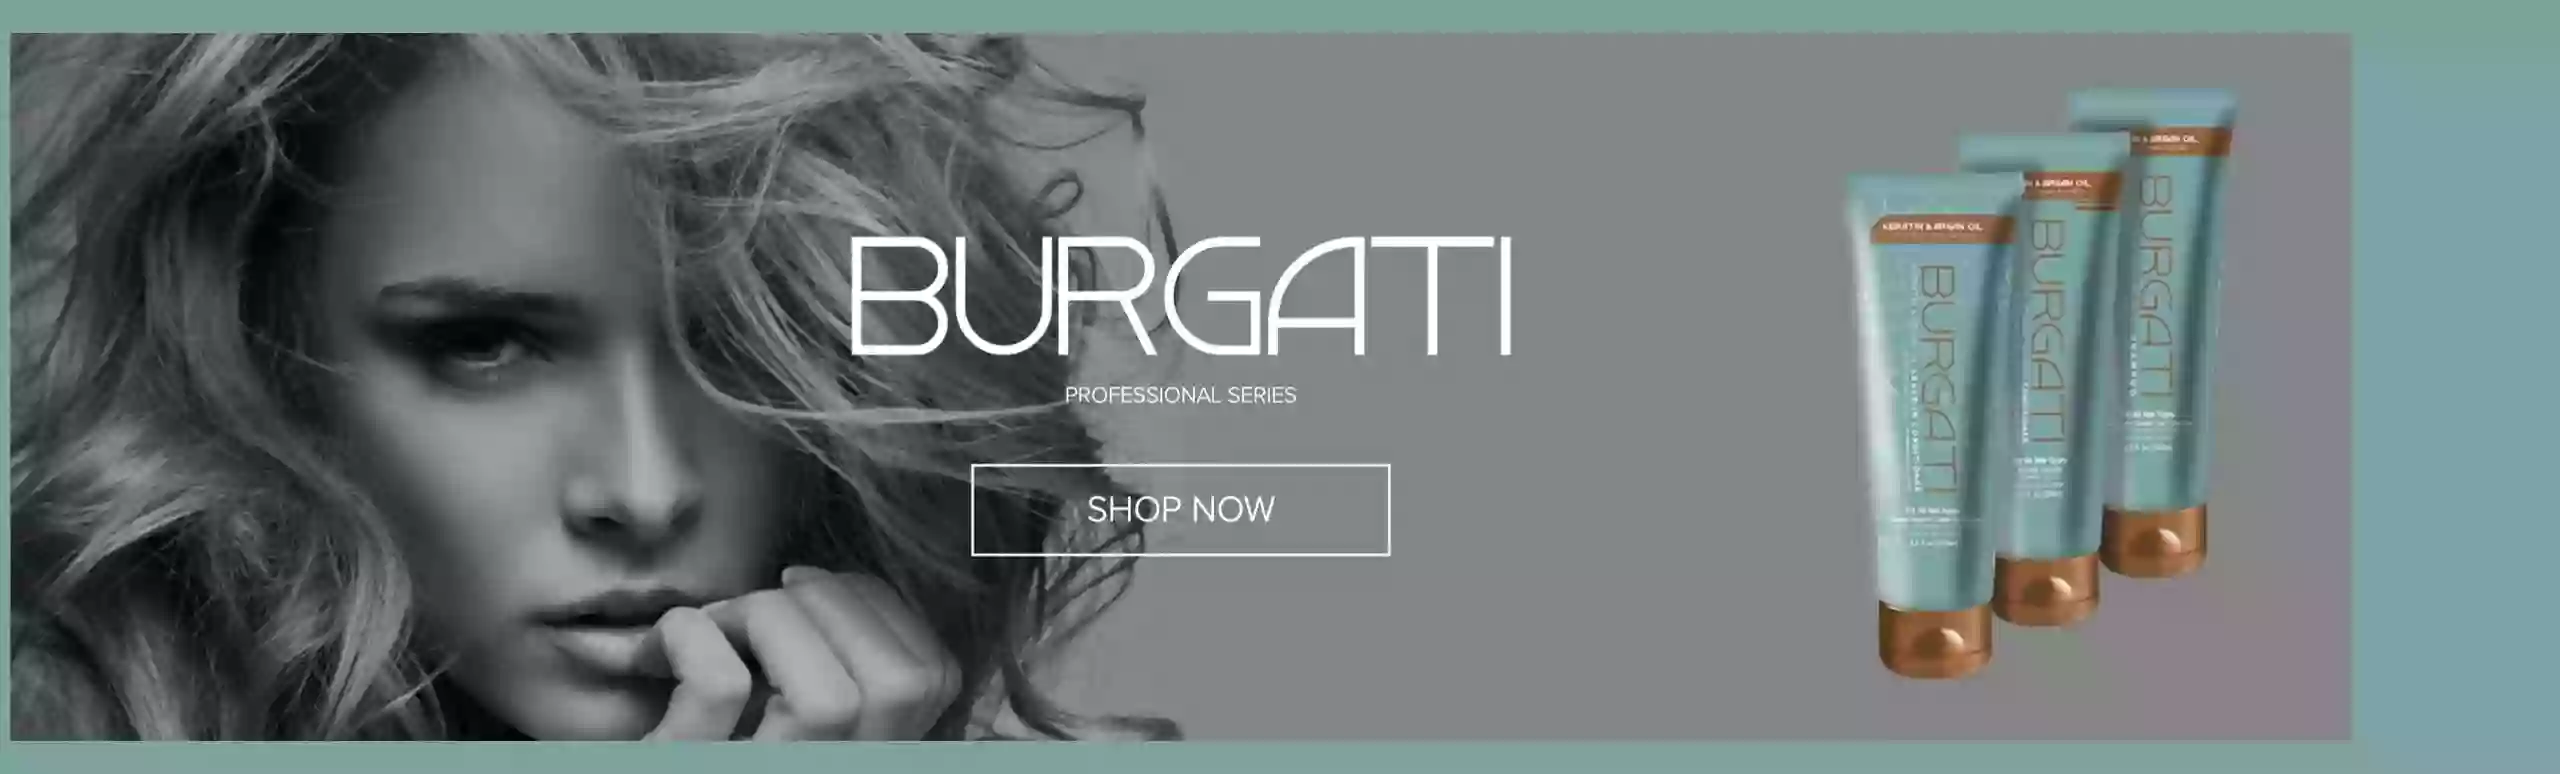 Burgati Salon & Store